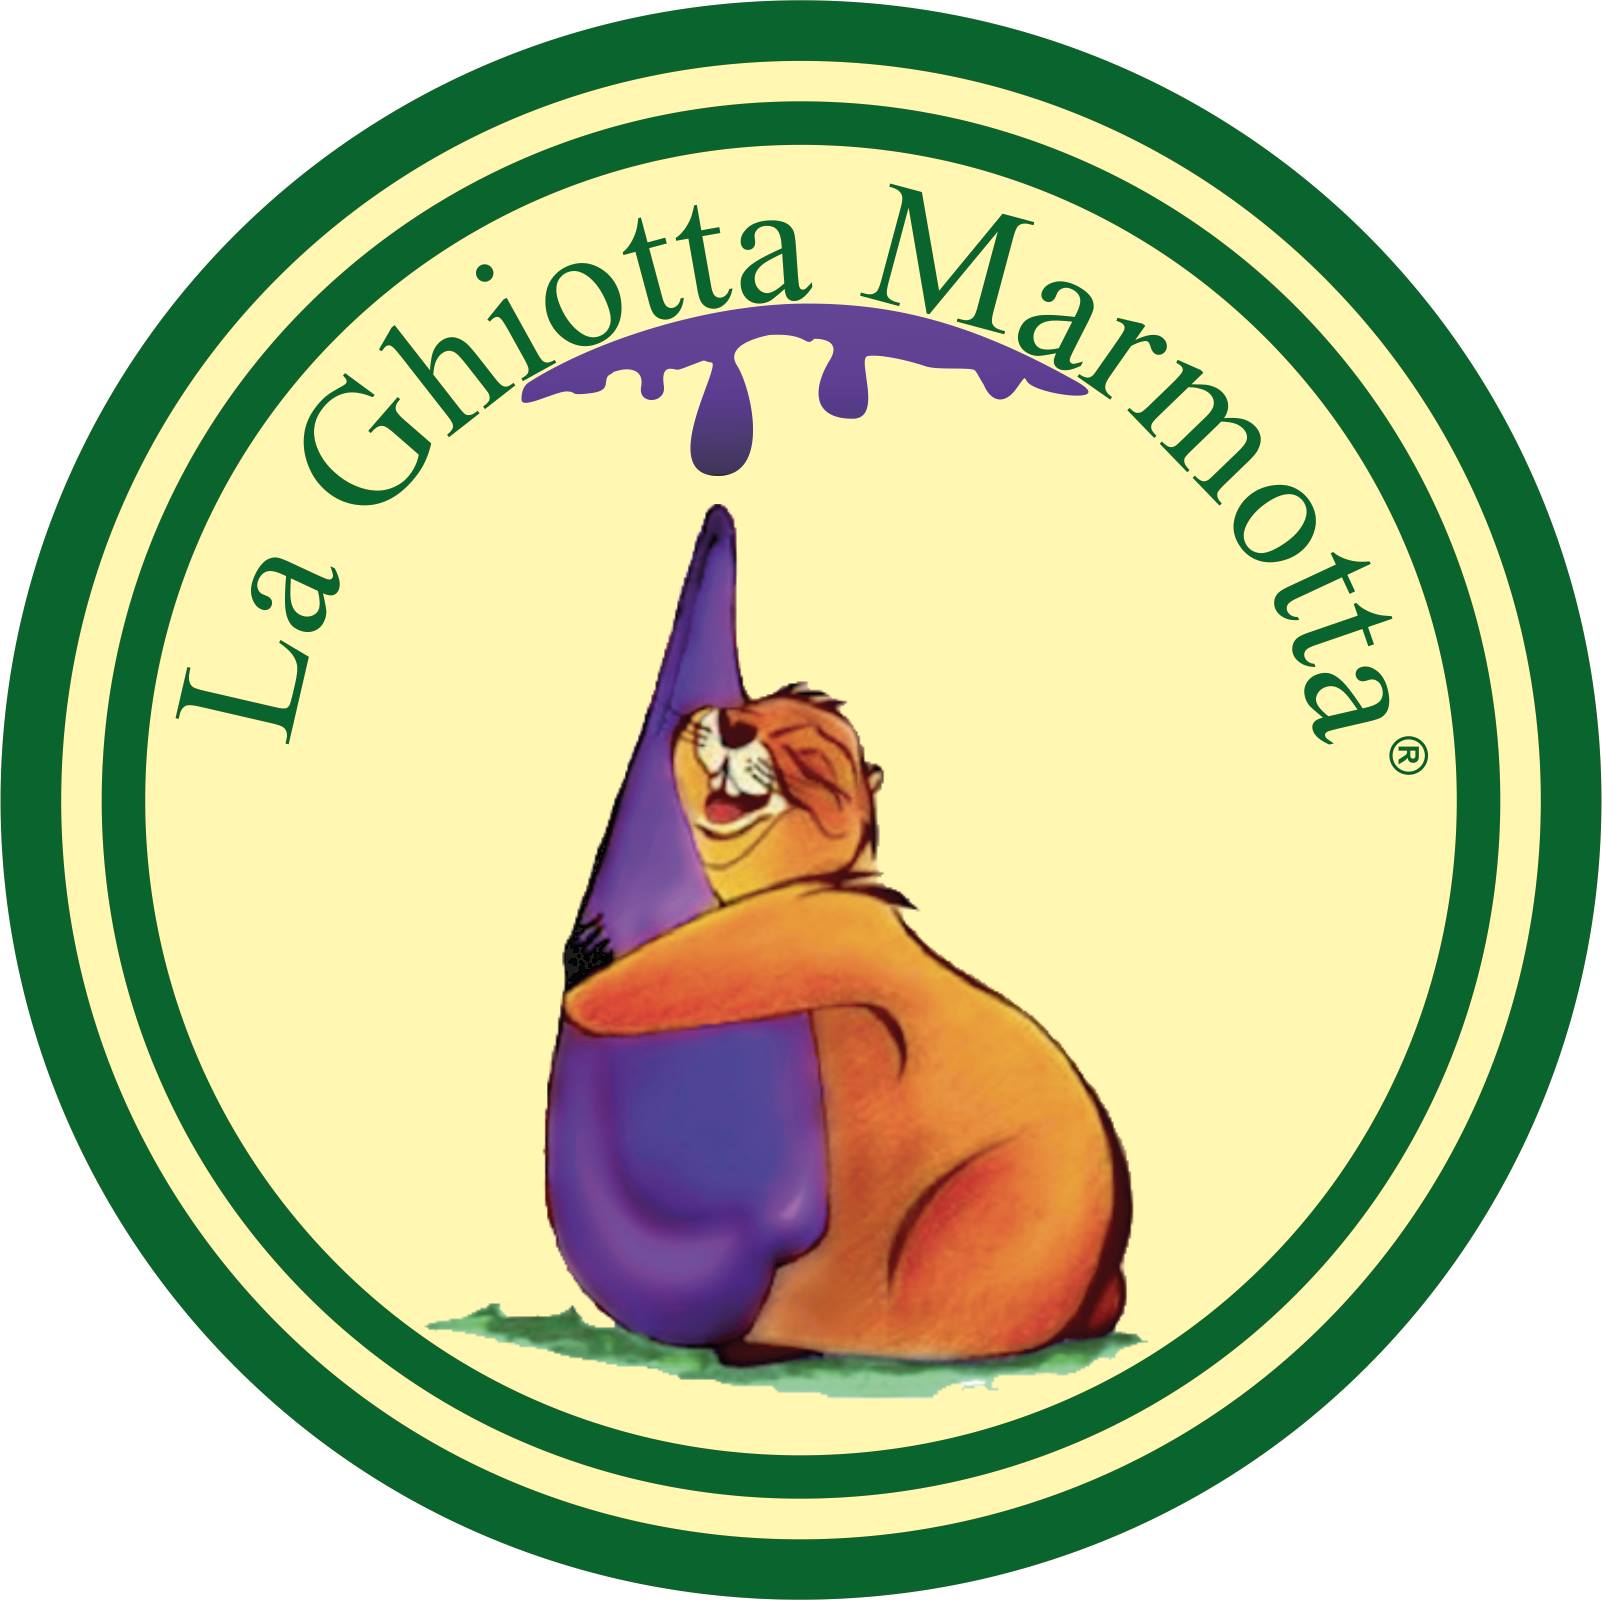 La Ghiotta Marmotta 